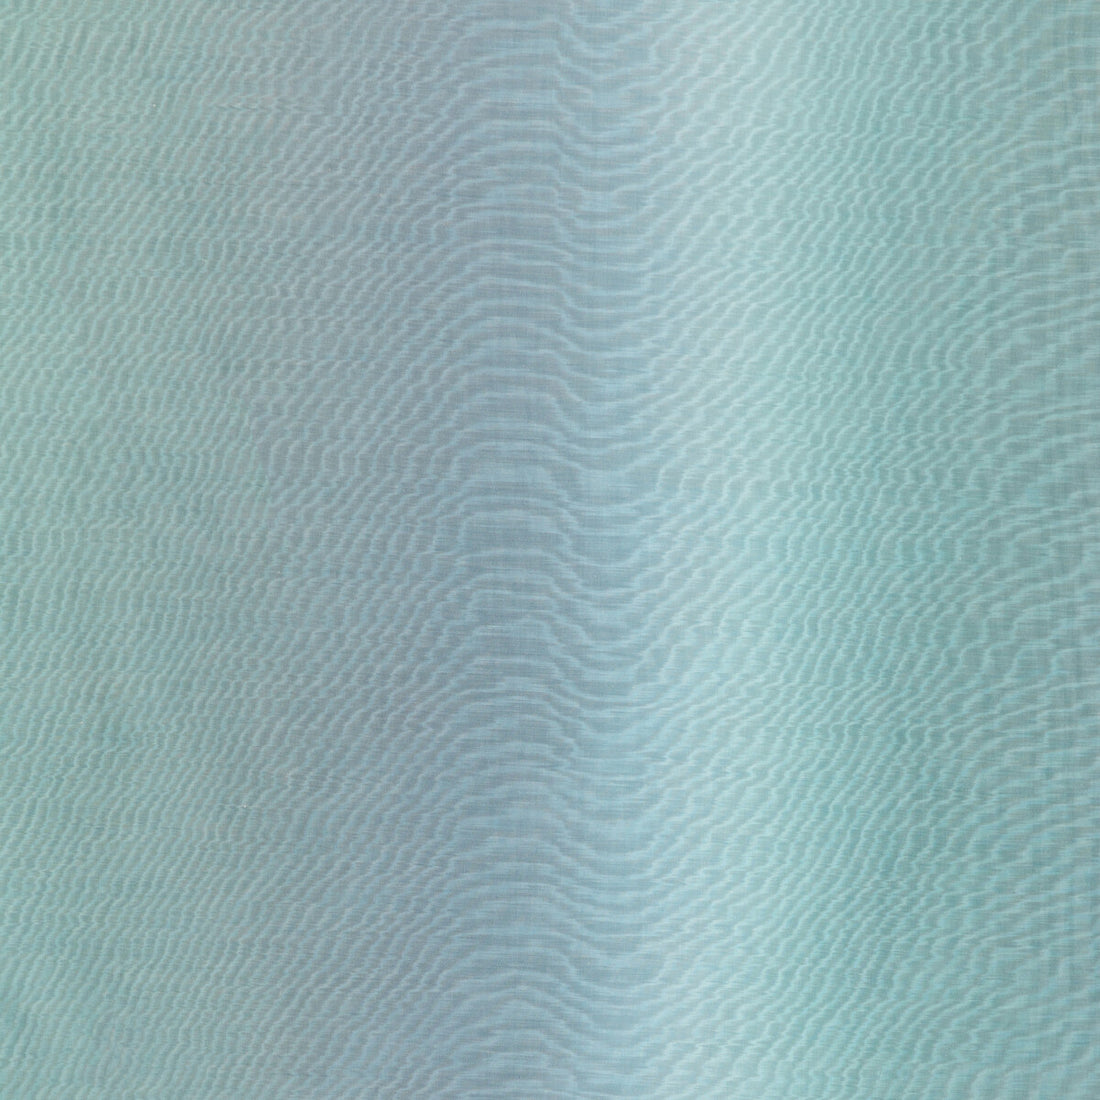 Horizonte fabric in azure color - pattern 2020214.5.0 - by Lee Jofa in the Oscar De La Renta IV collection